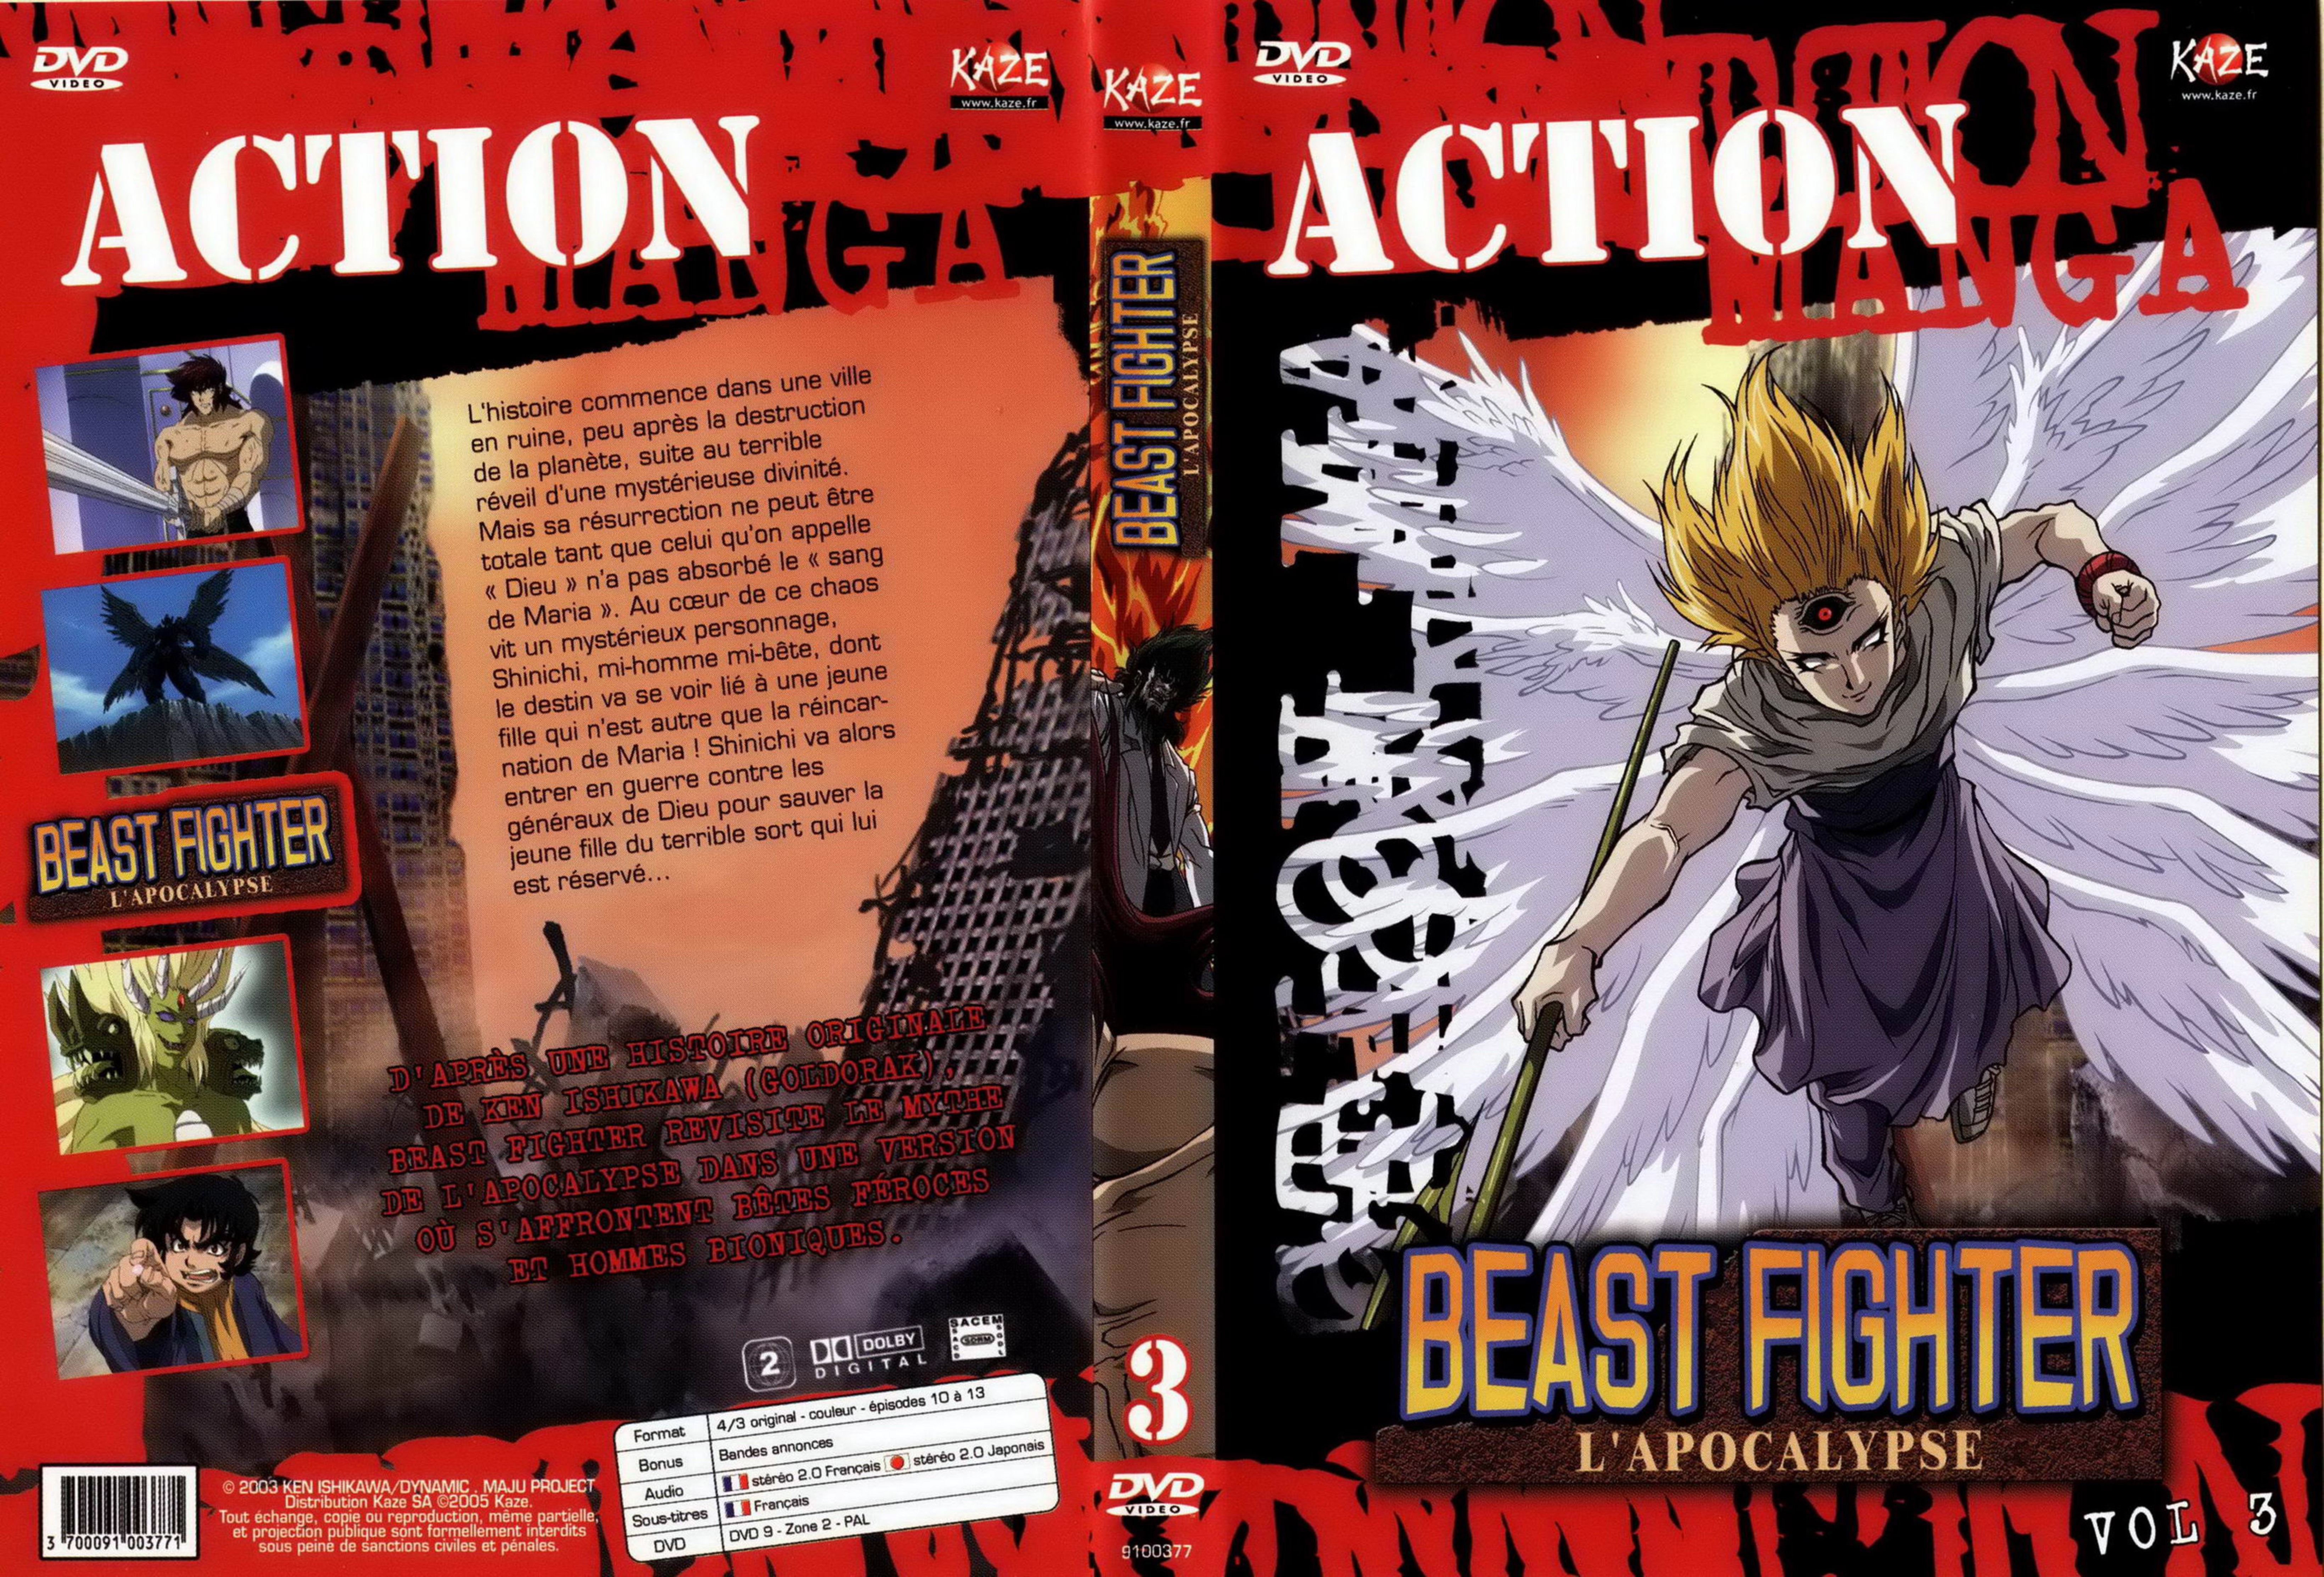 Jaquette DVD Beast fighter vol 3